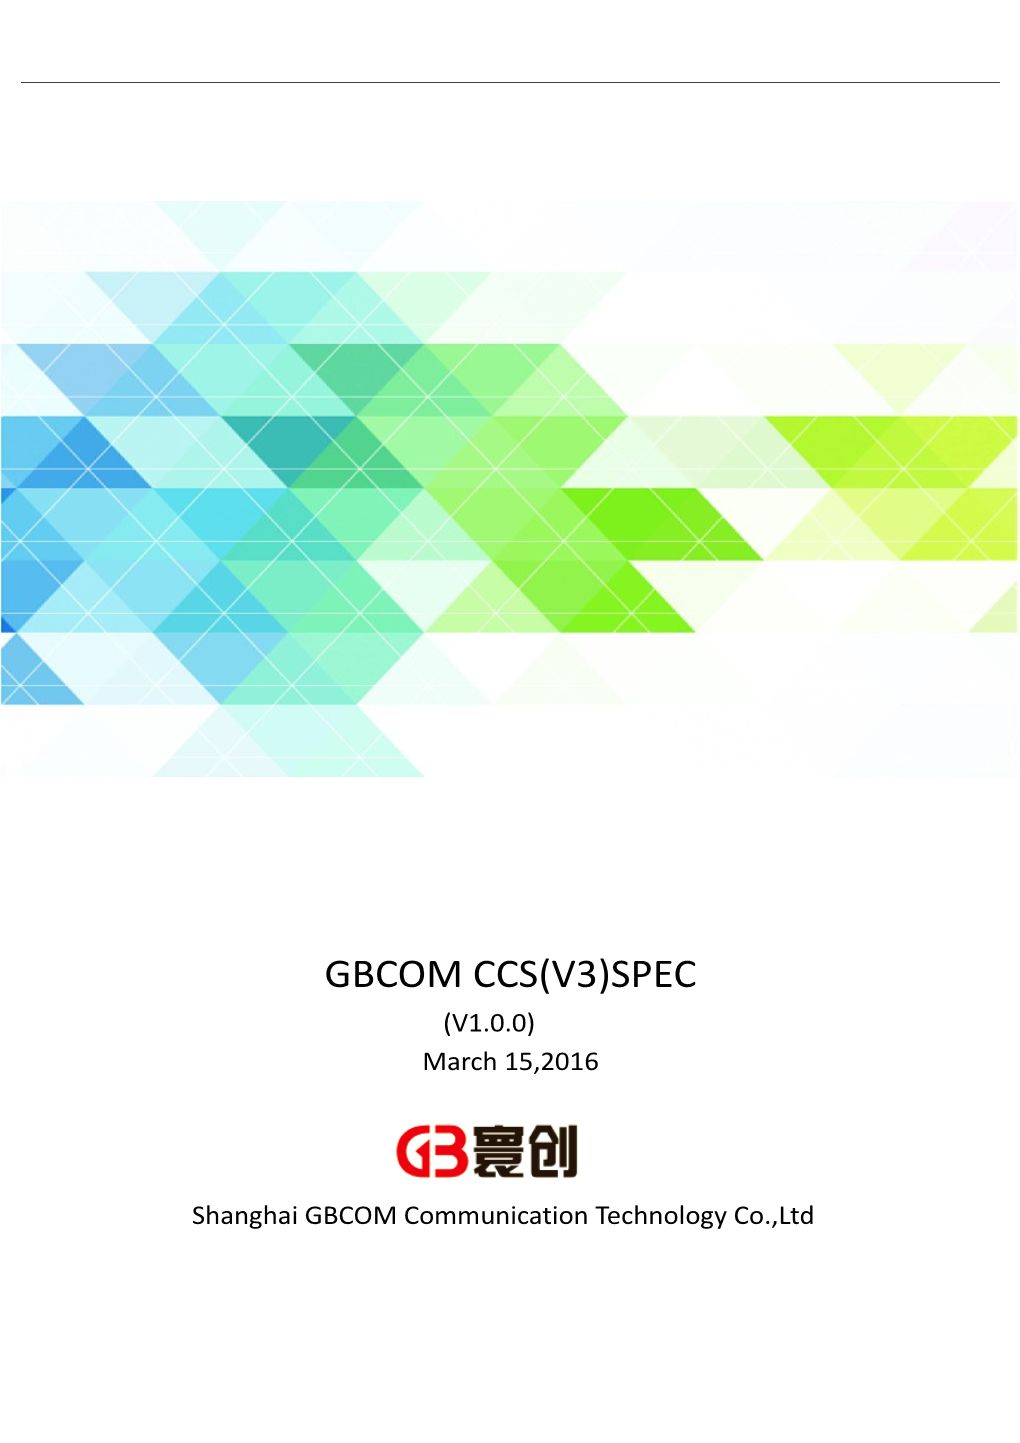 Shanghai GBCOM Communication Technology Co.,Ltd Train Access Unit (TAU) Specification